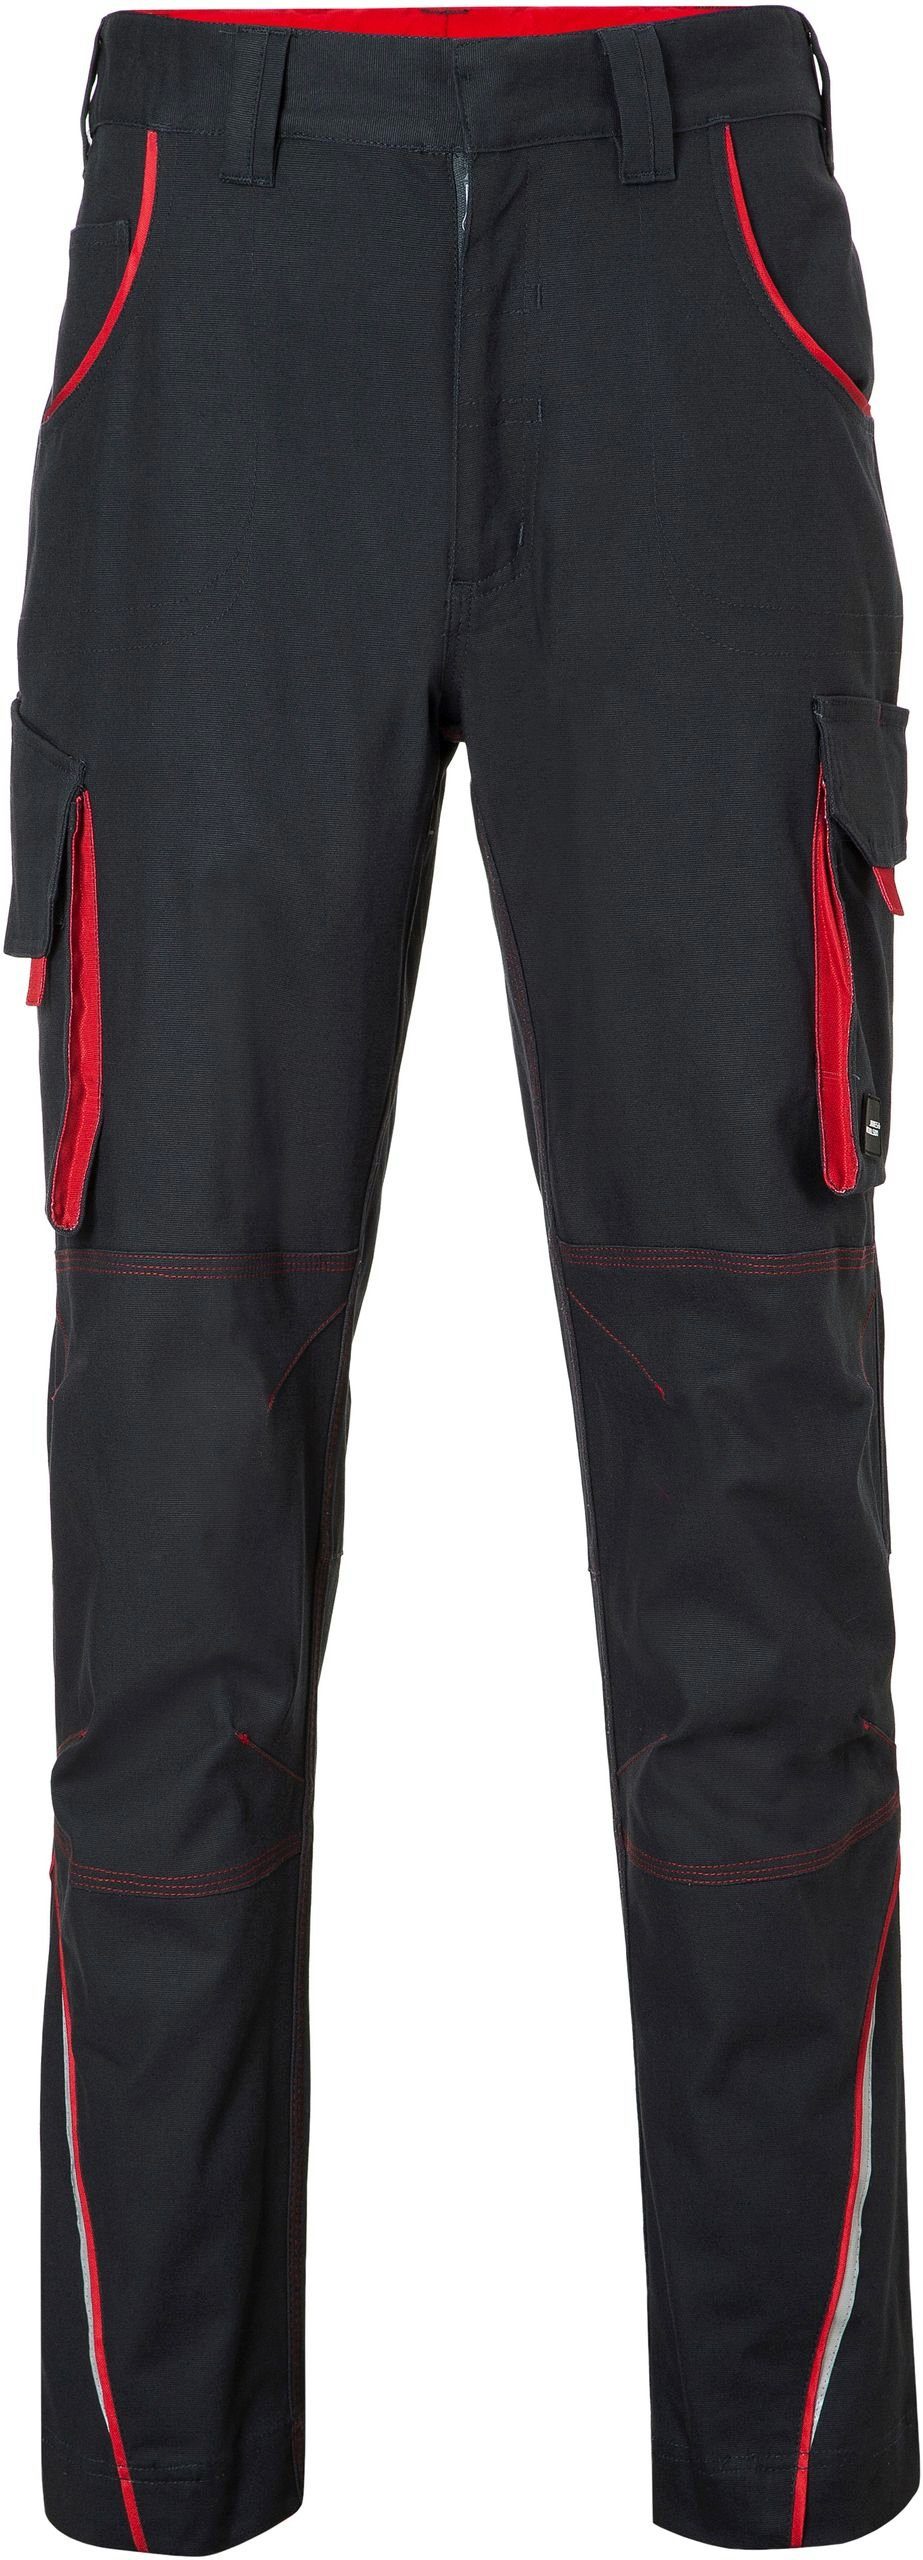 James & carbon/red Workwear Hose FaS50847 Arbeitshose Nicholson